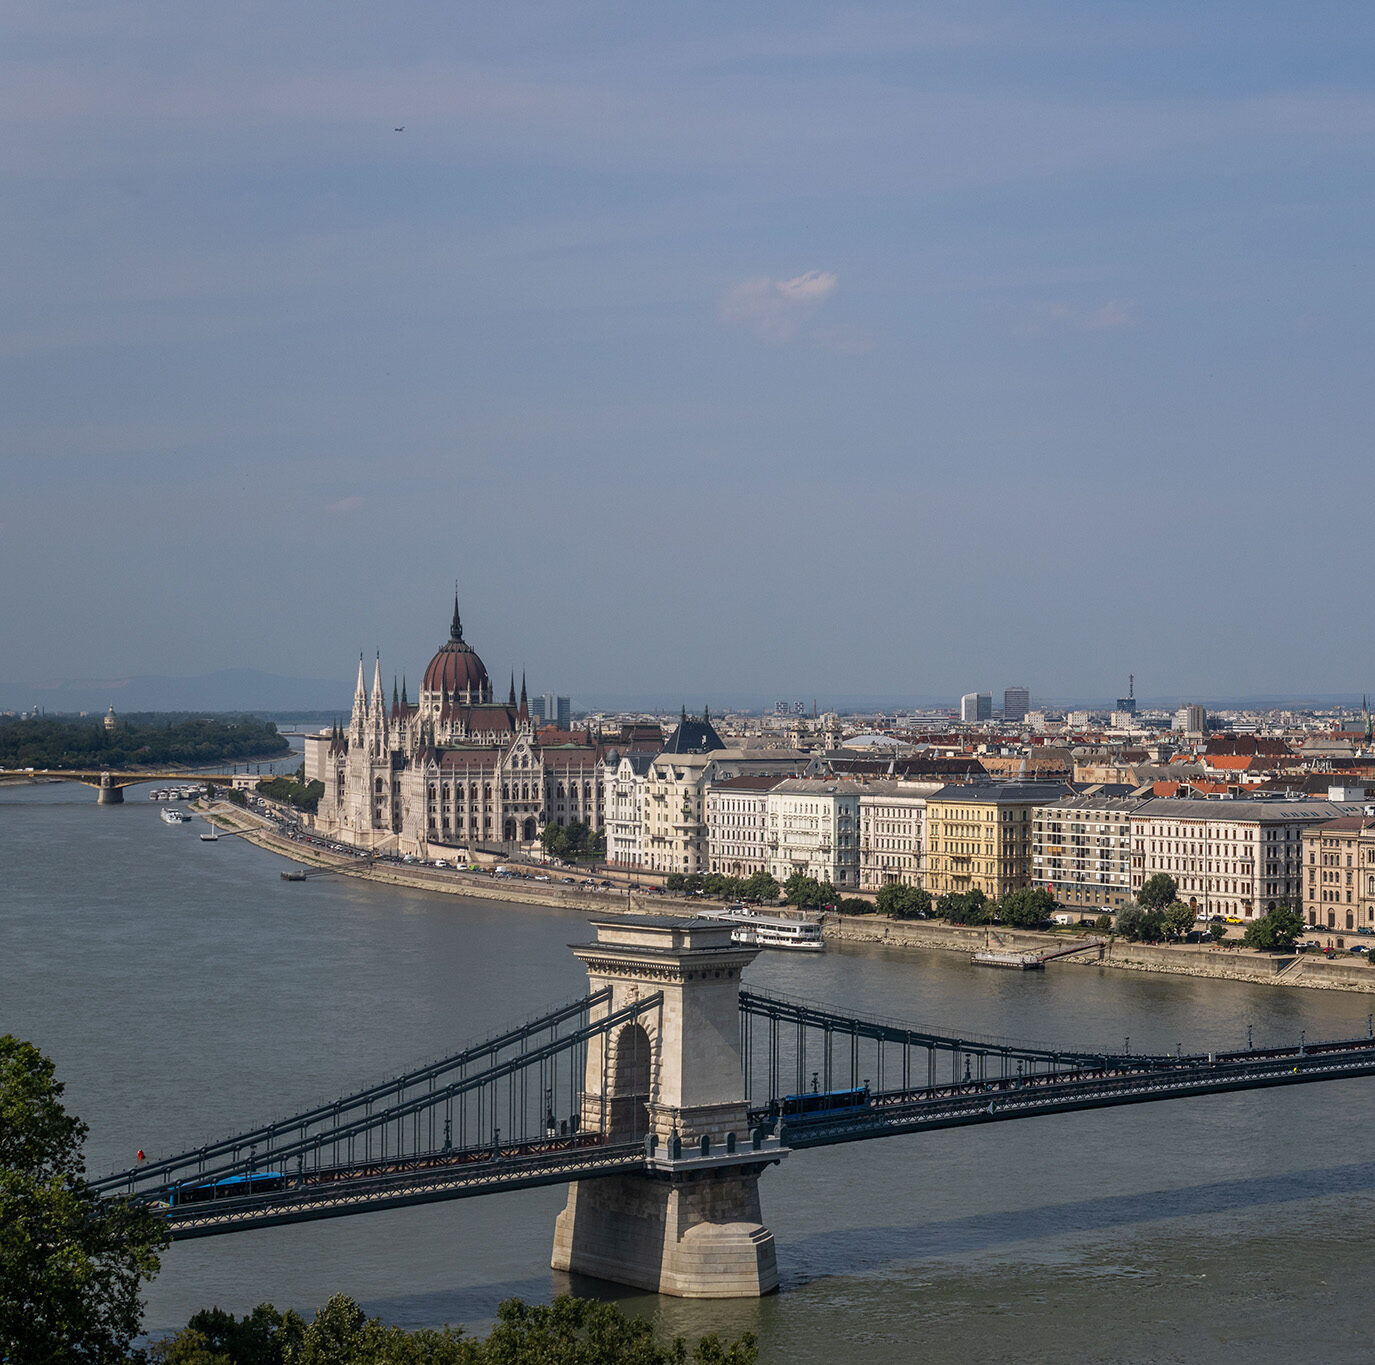 A landscape shot showing the Pest side of Budapest.